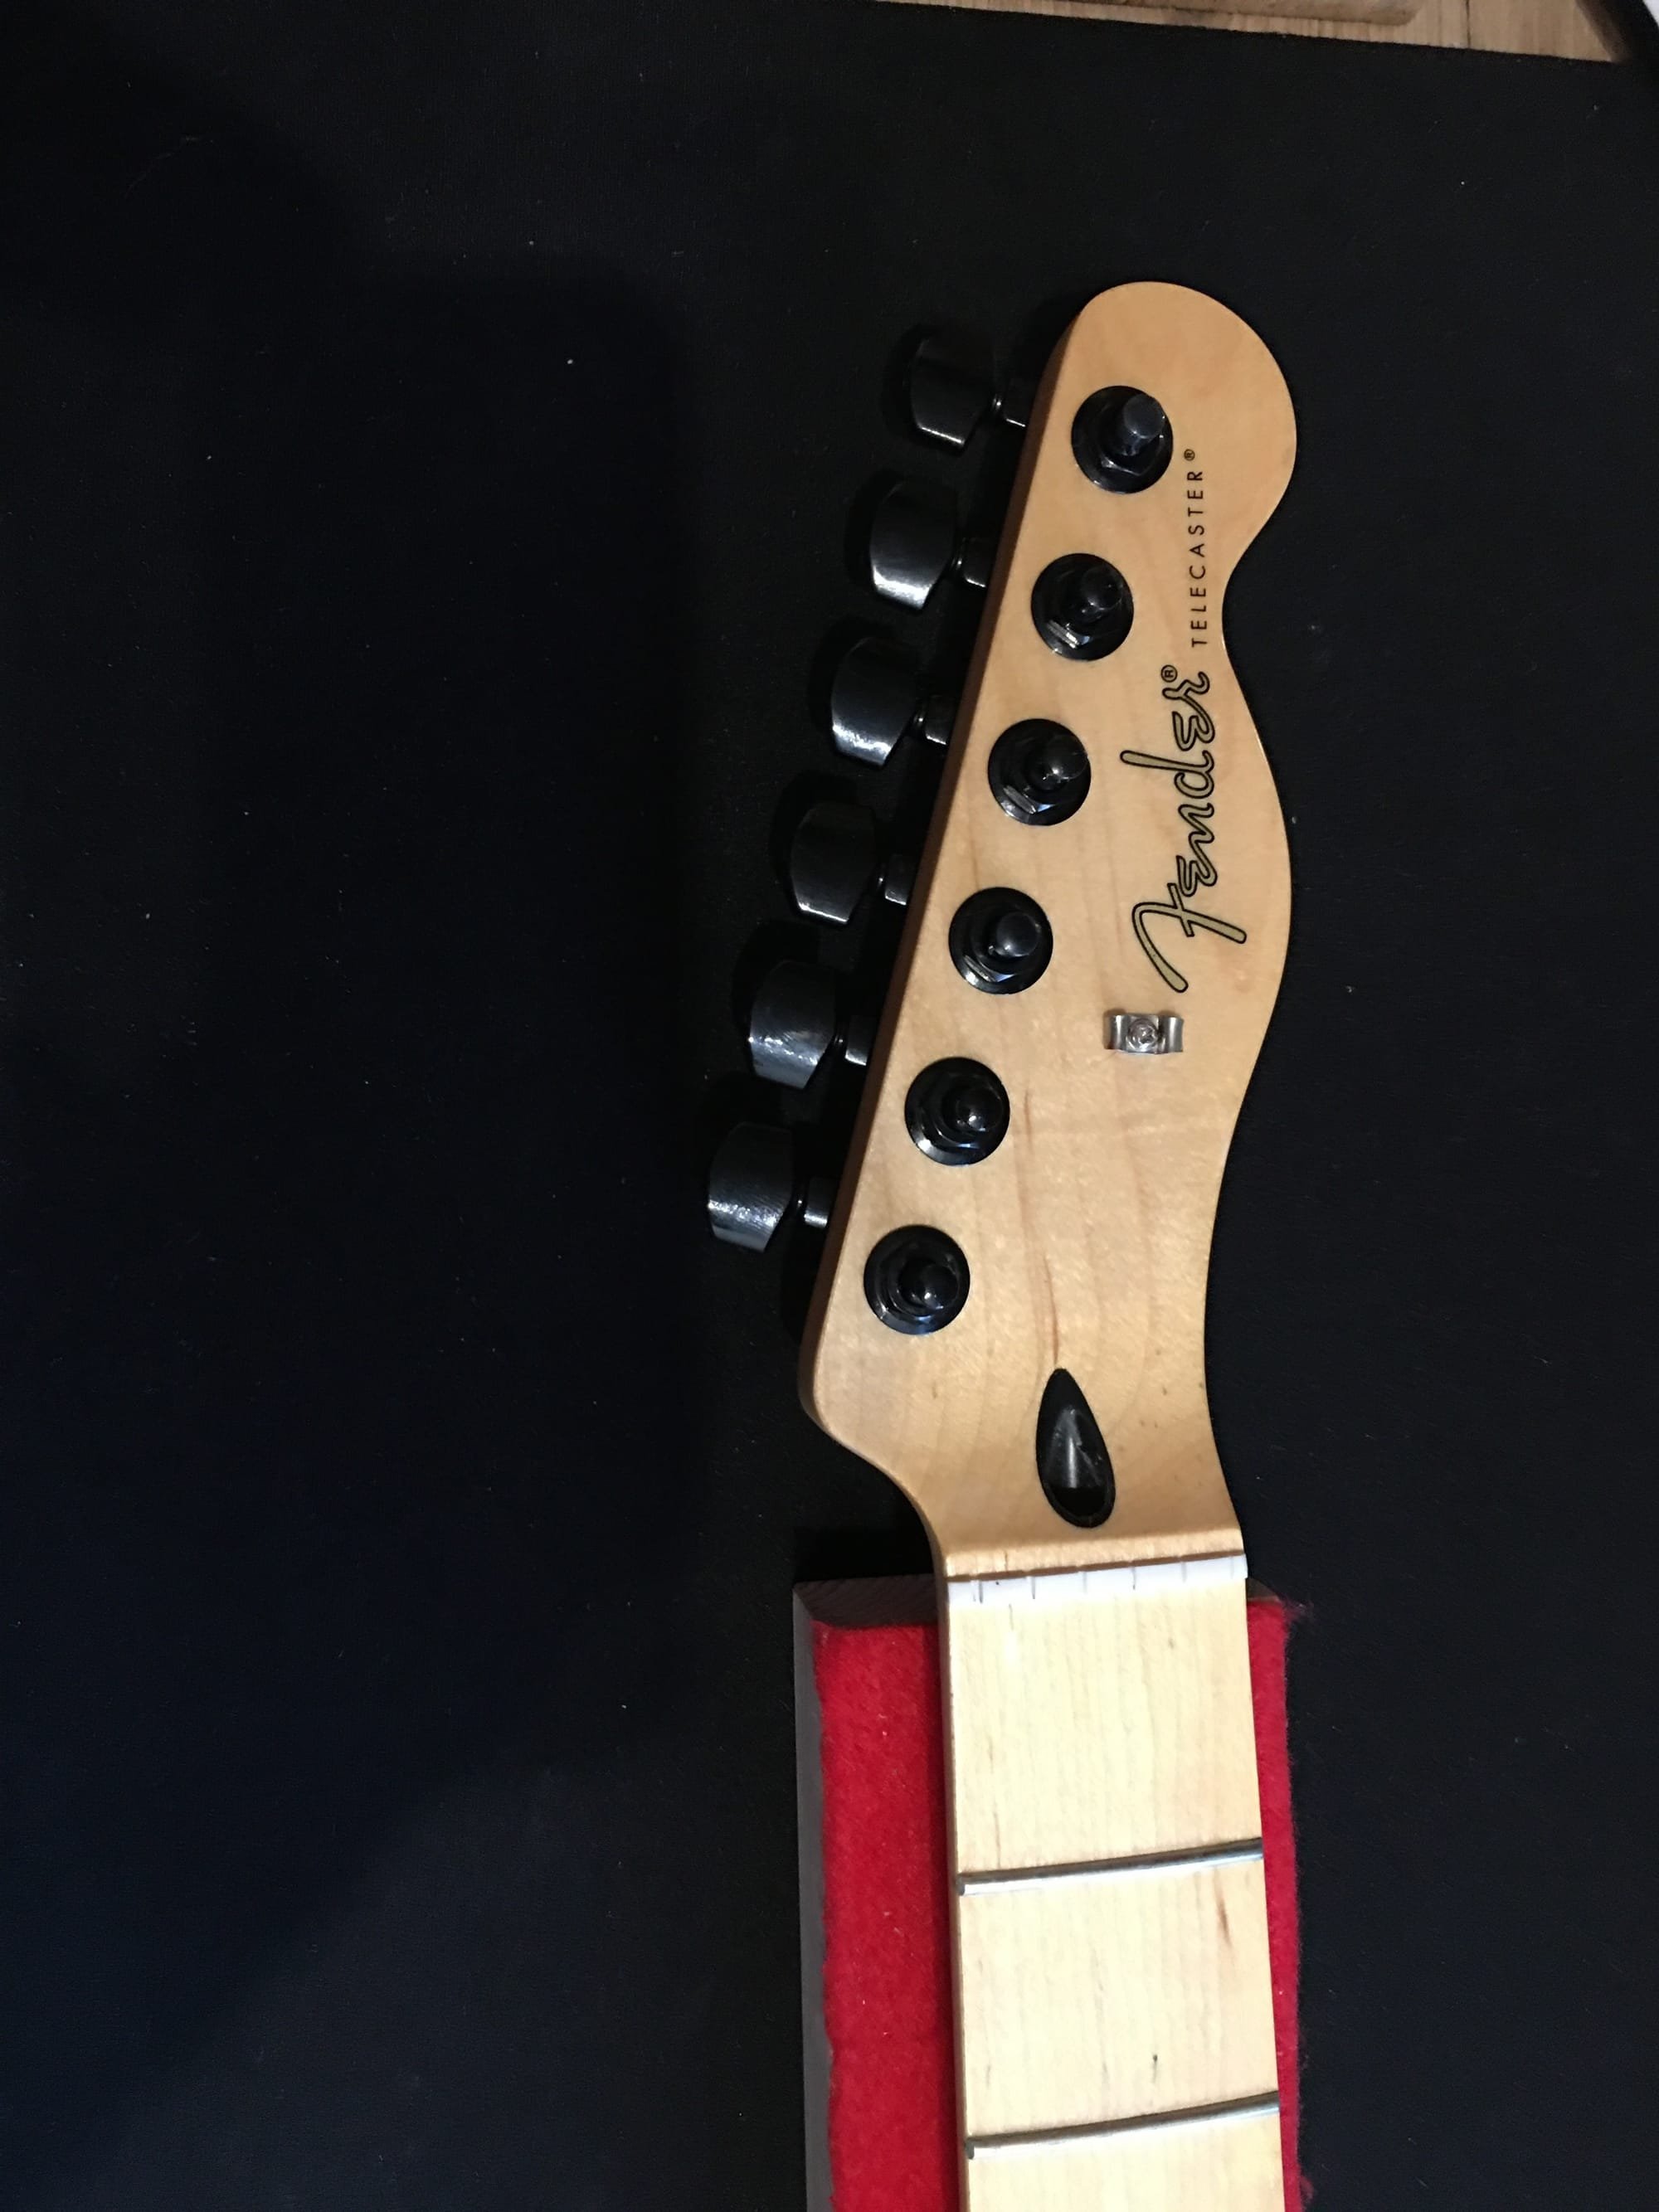 Fender Telecaster Upgrades